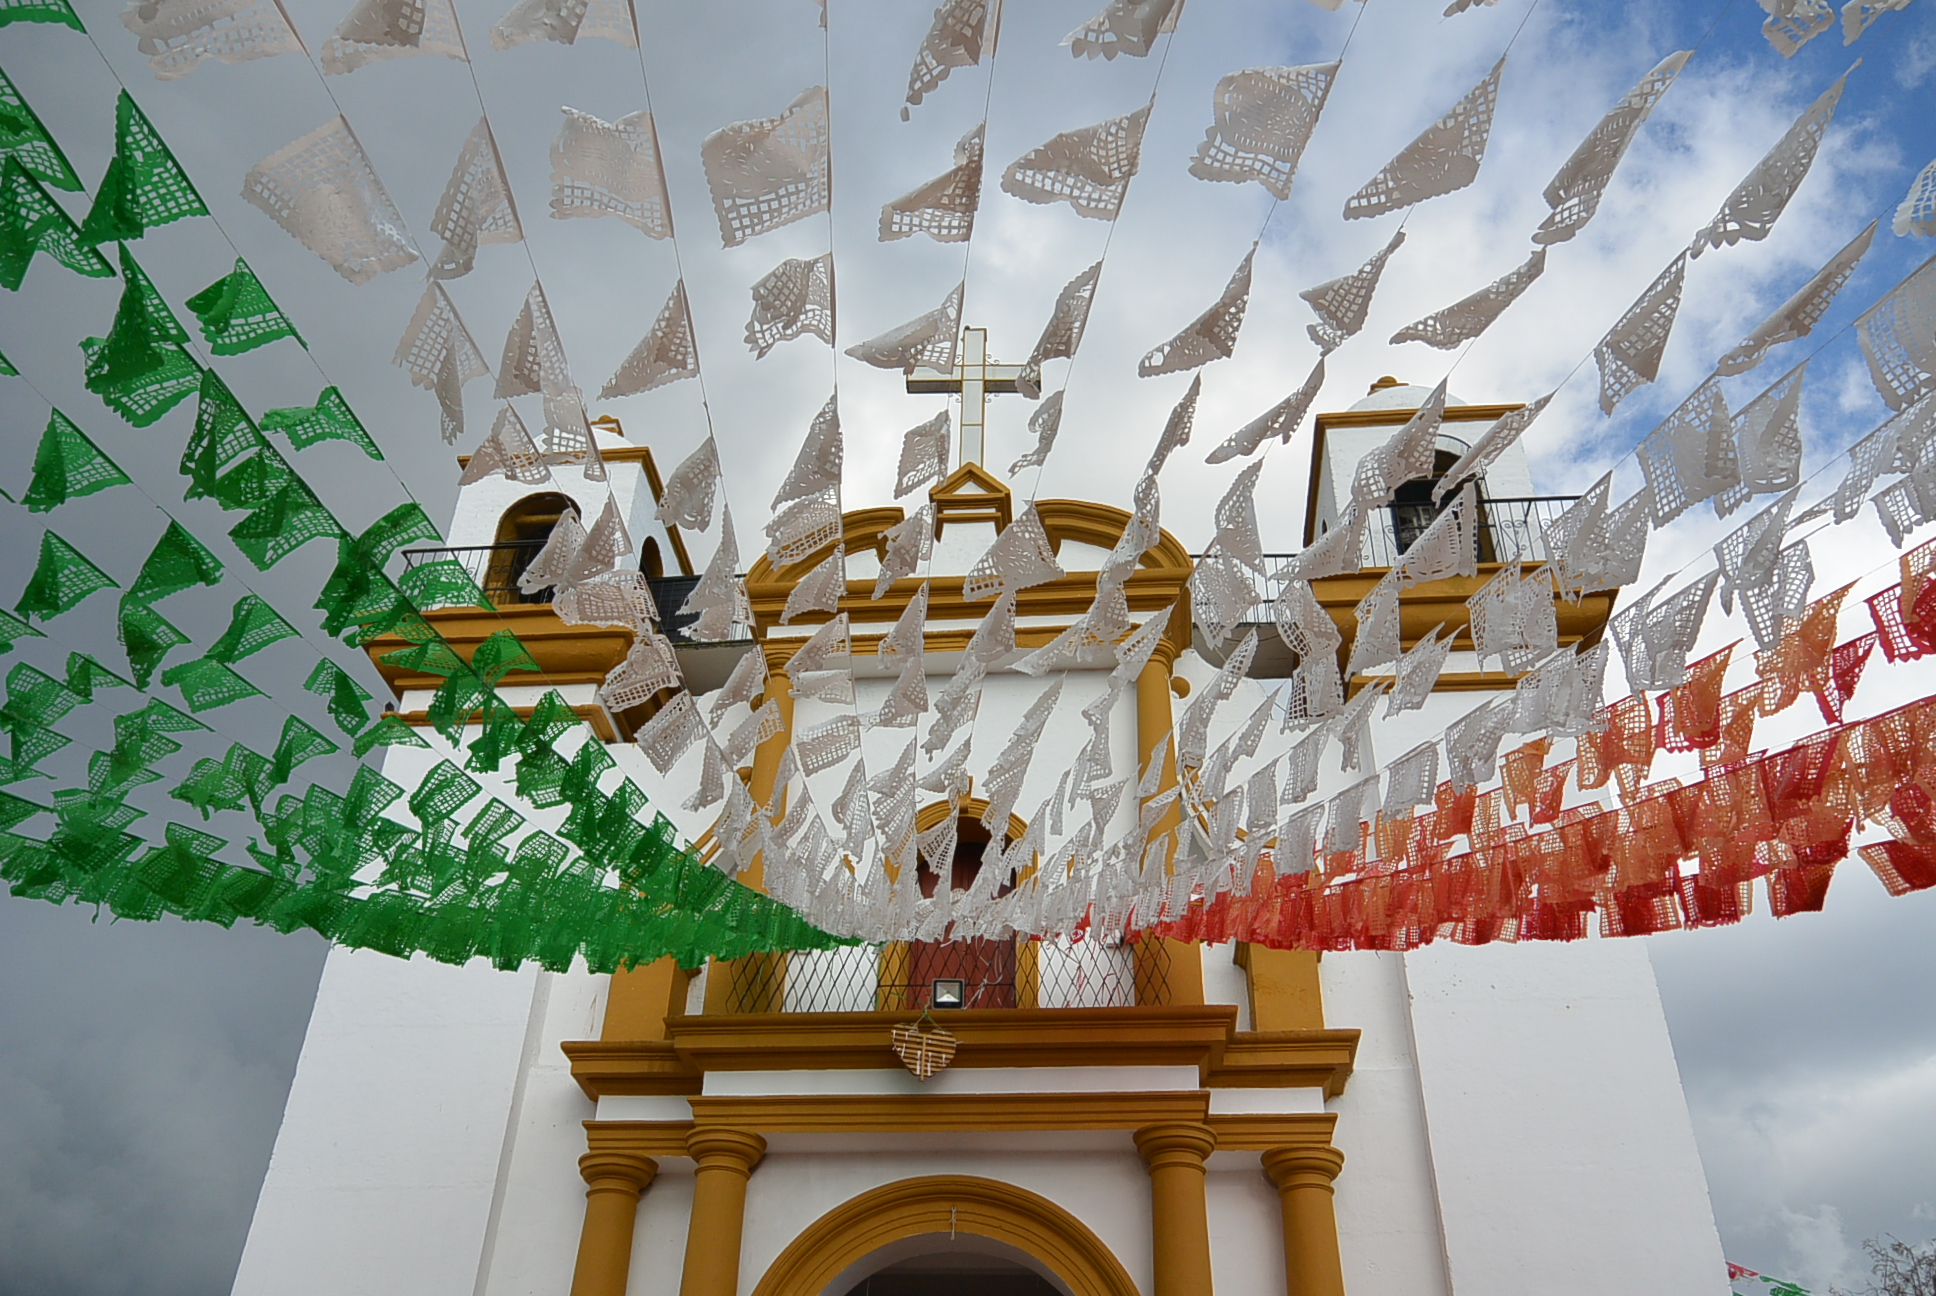 Die verzierte Iglesia de Guadalupe